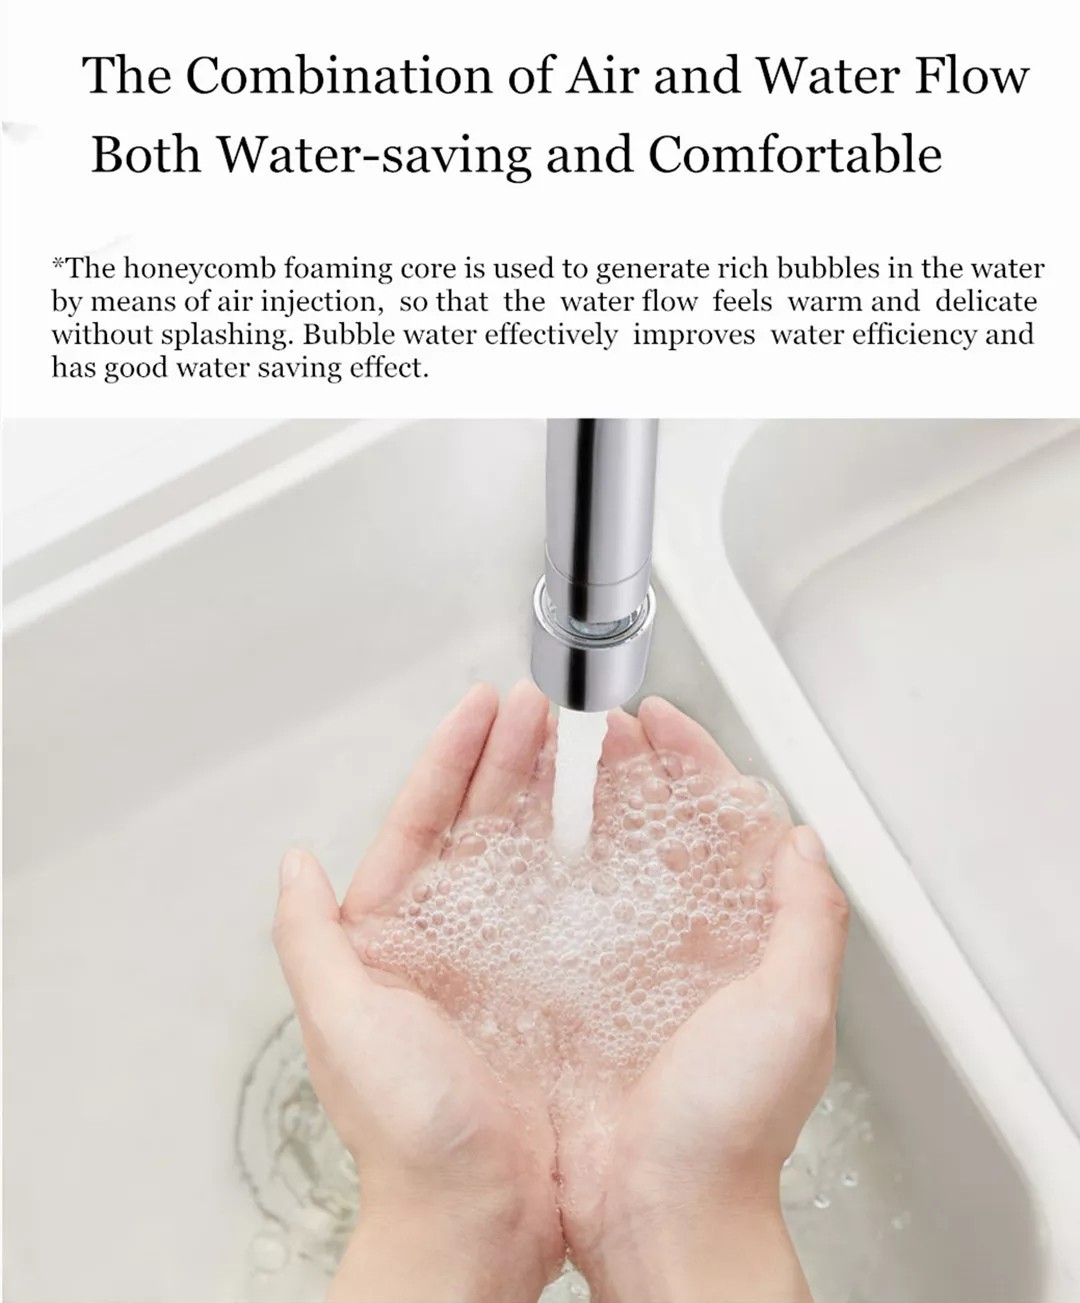 DXSZ001-1 Kitchen Faucet Bubbler 360-Degree Double Modes 2-flow Splash-proof from Xiaomi youpin - Silver DXSZ001-1